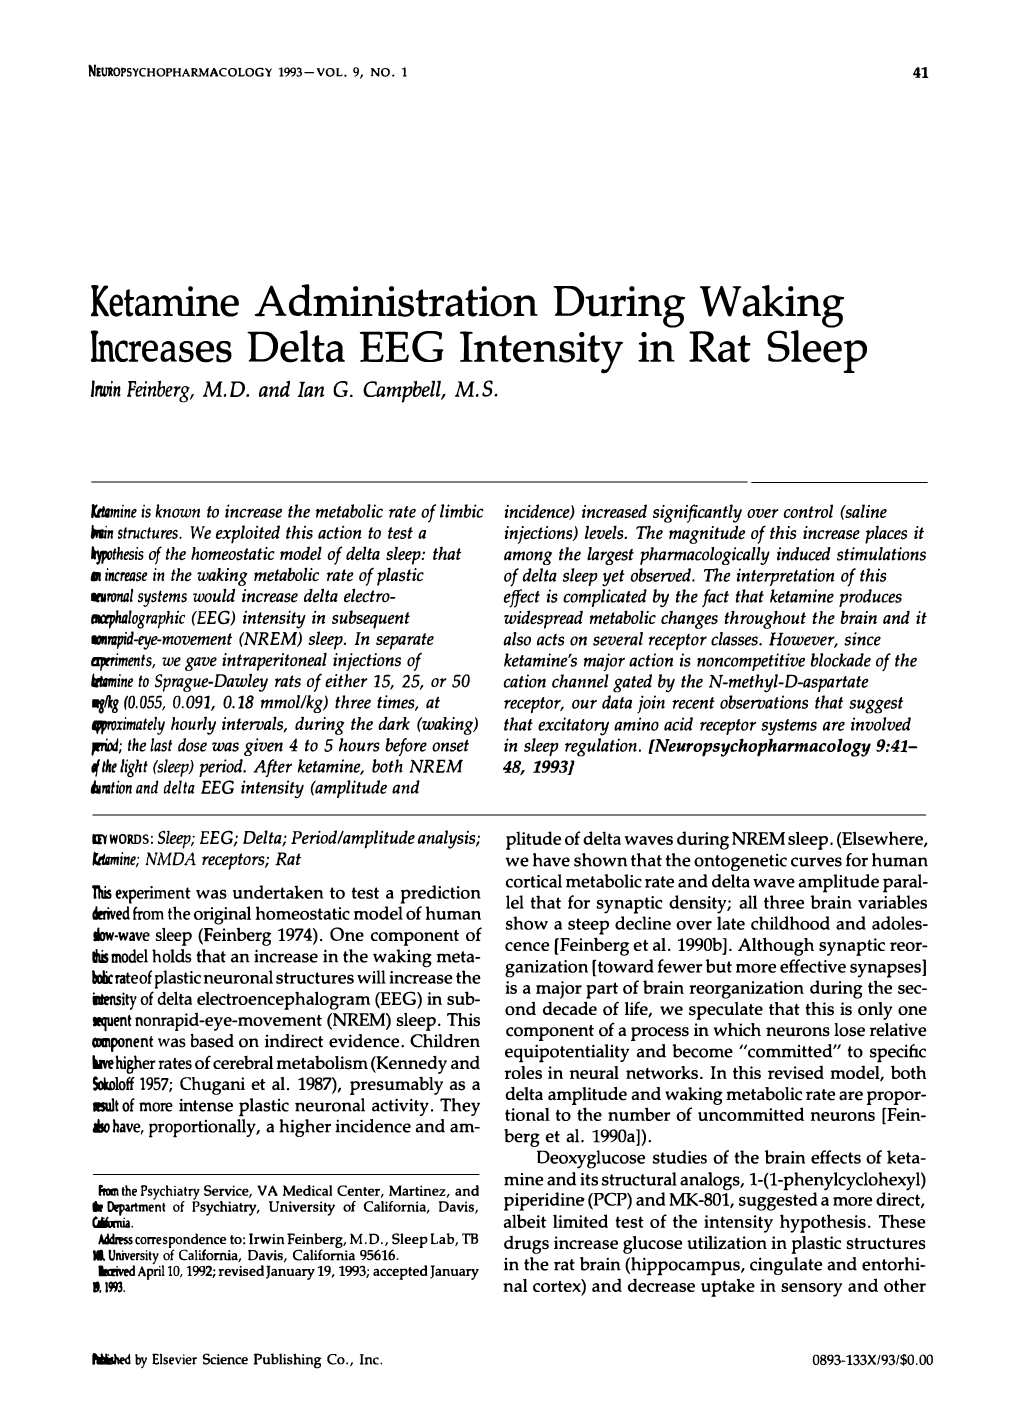 Ketamine Administration During Waking Increases Delta EEG Intensity in Rat Sleep Lnuin Feinberg, M.D